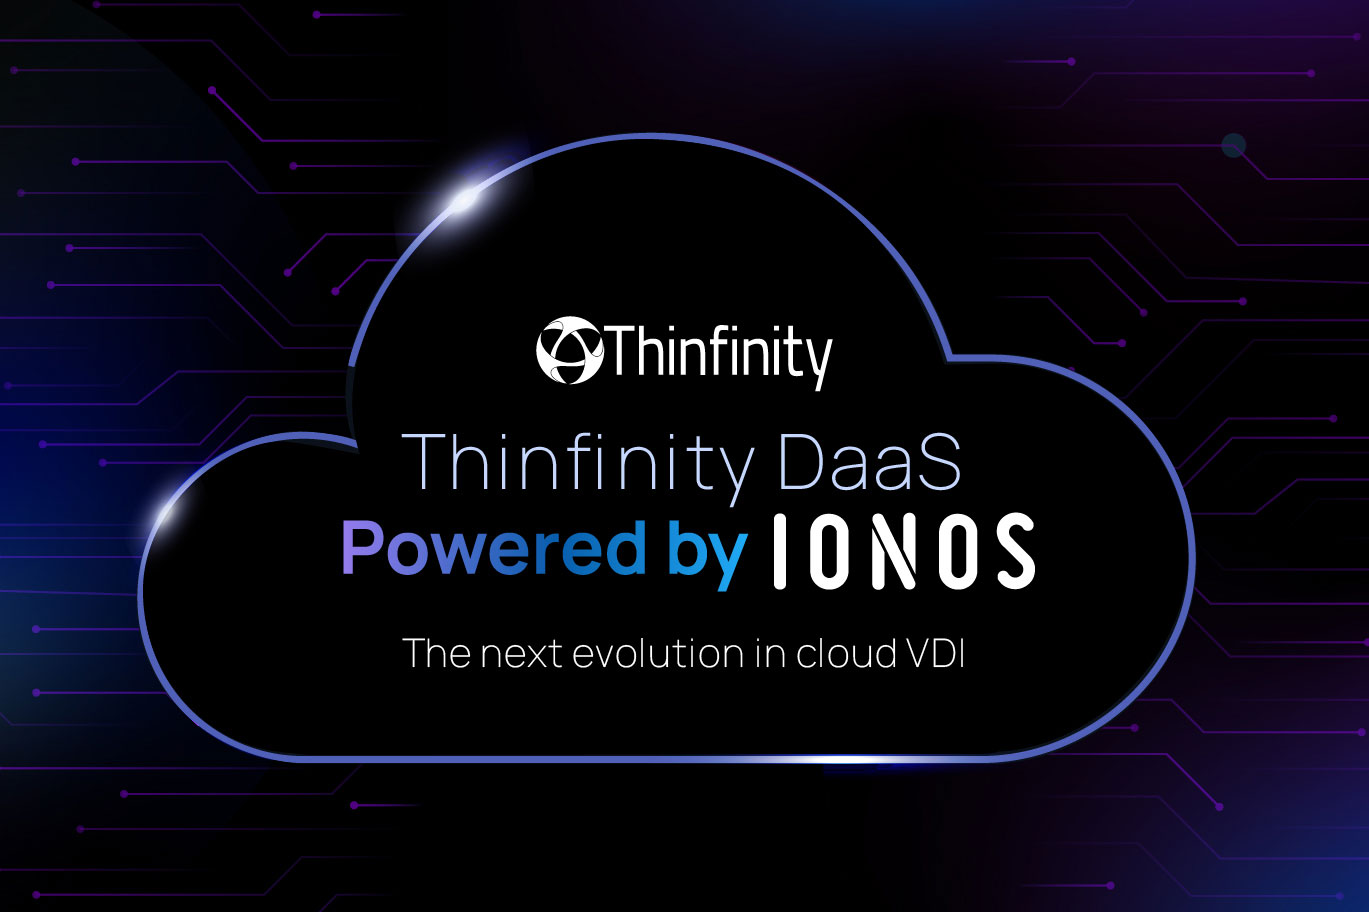 Cloud VDI - Thinfinity DaaS Powered by Ionos